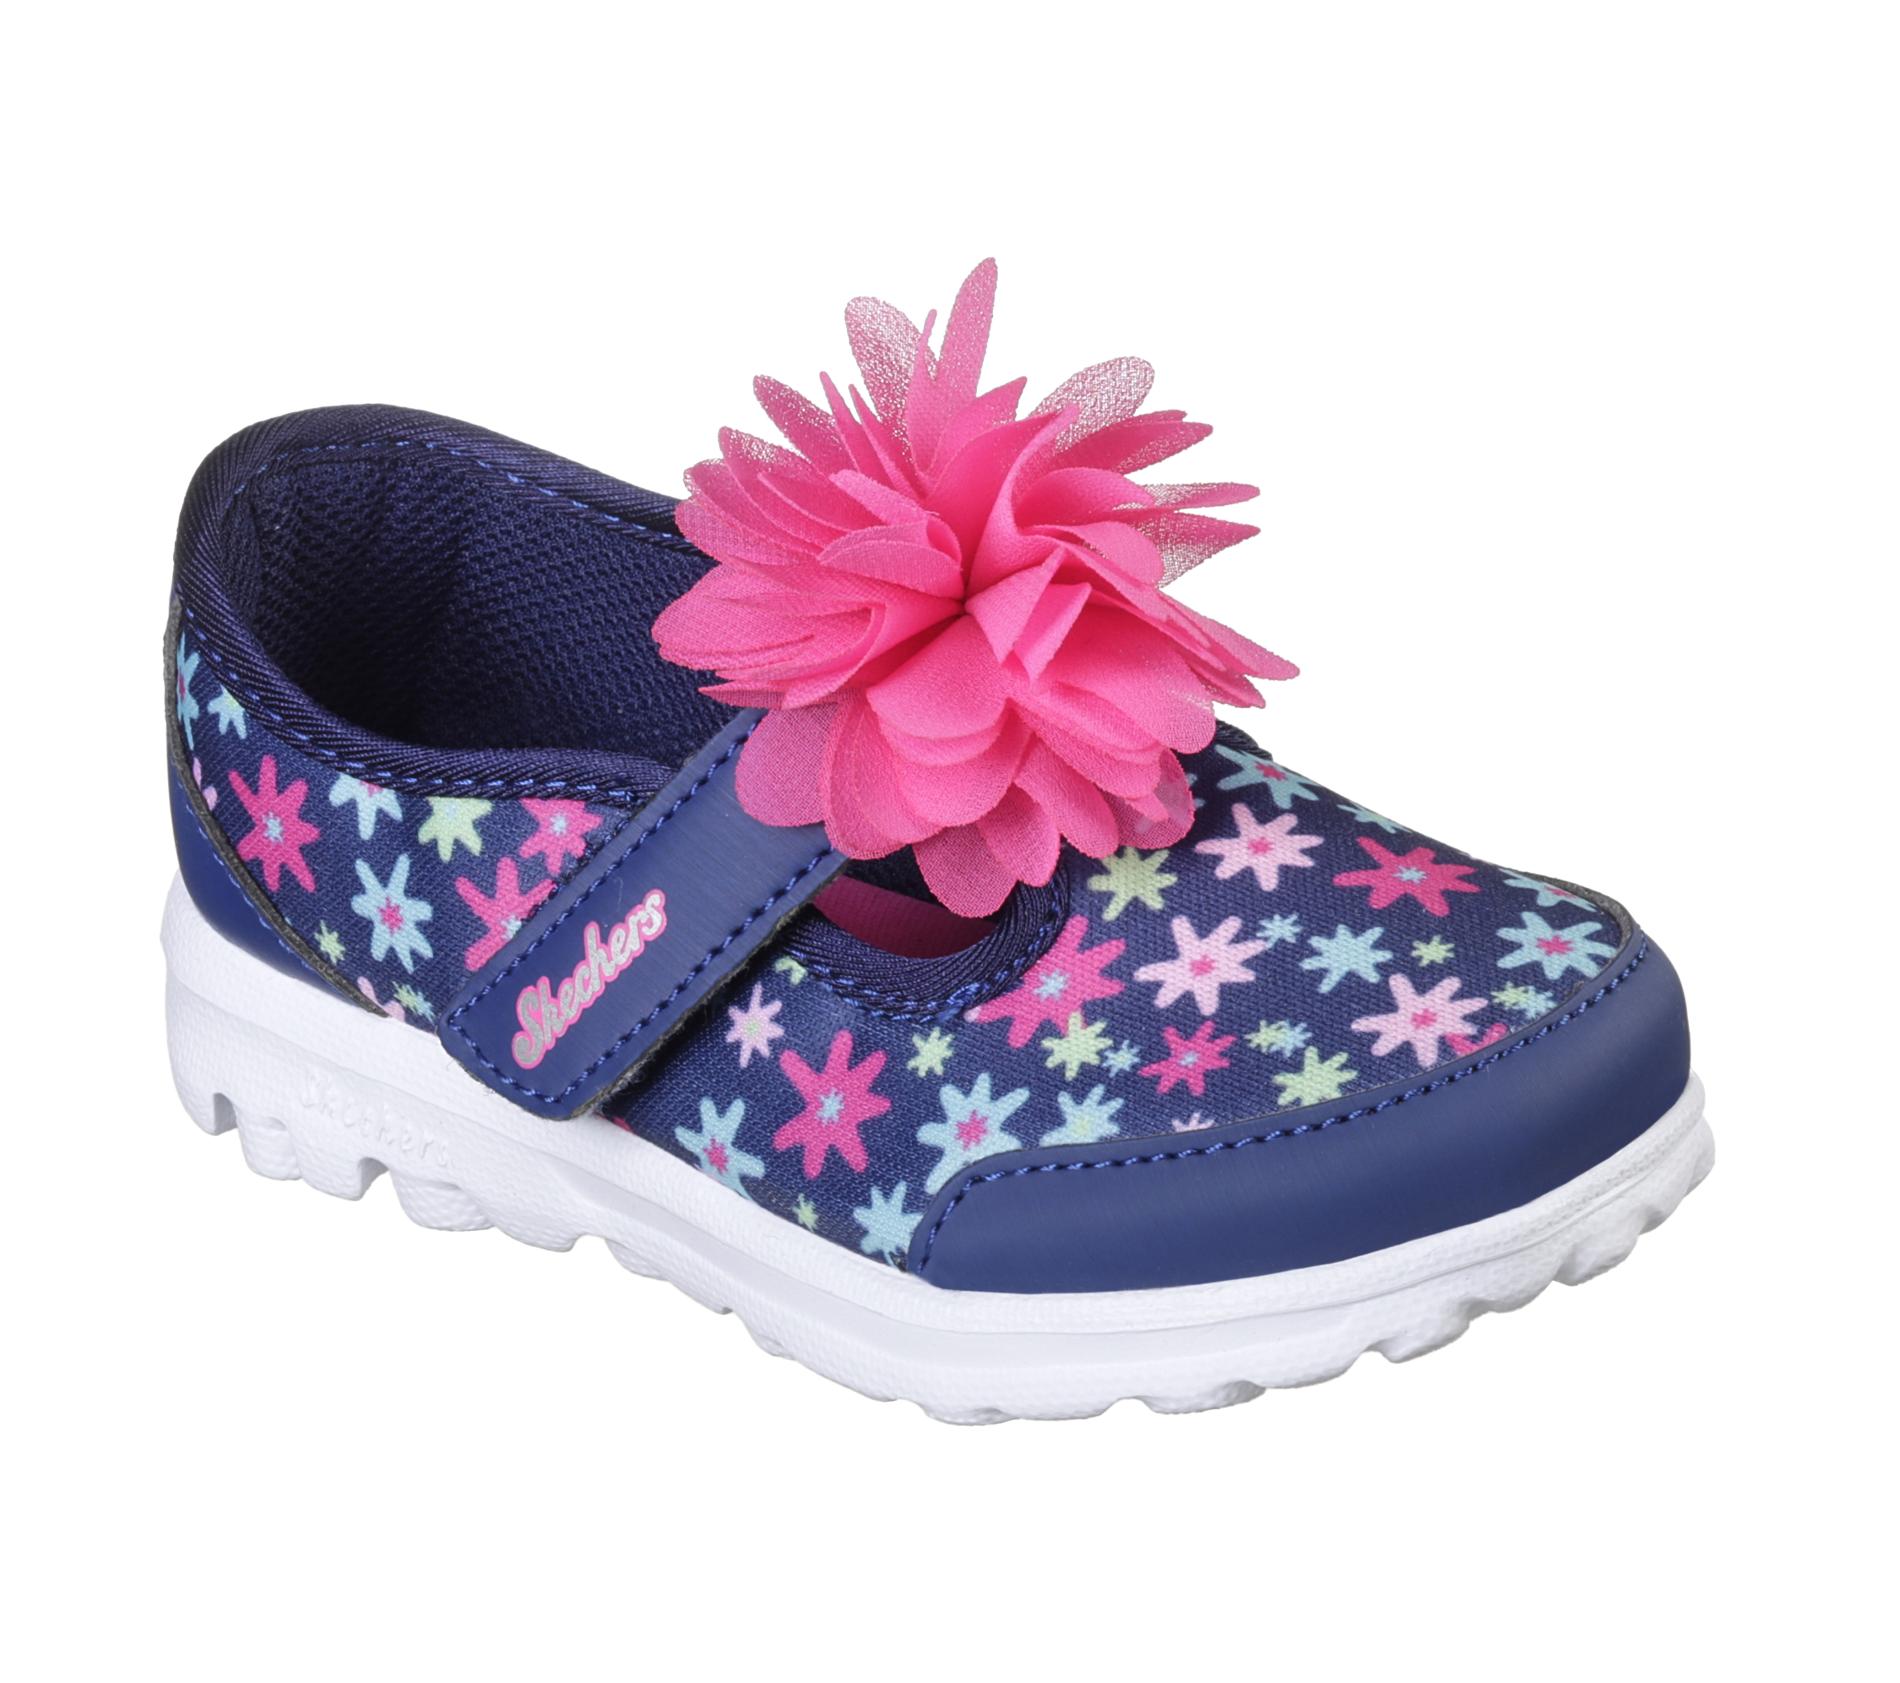 Skechers Toddler Girls' Blue/Floral Print Mary Jane Shoe